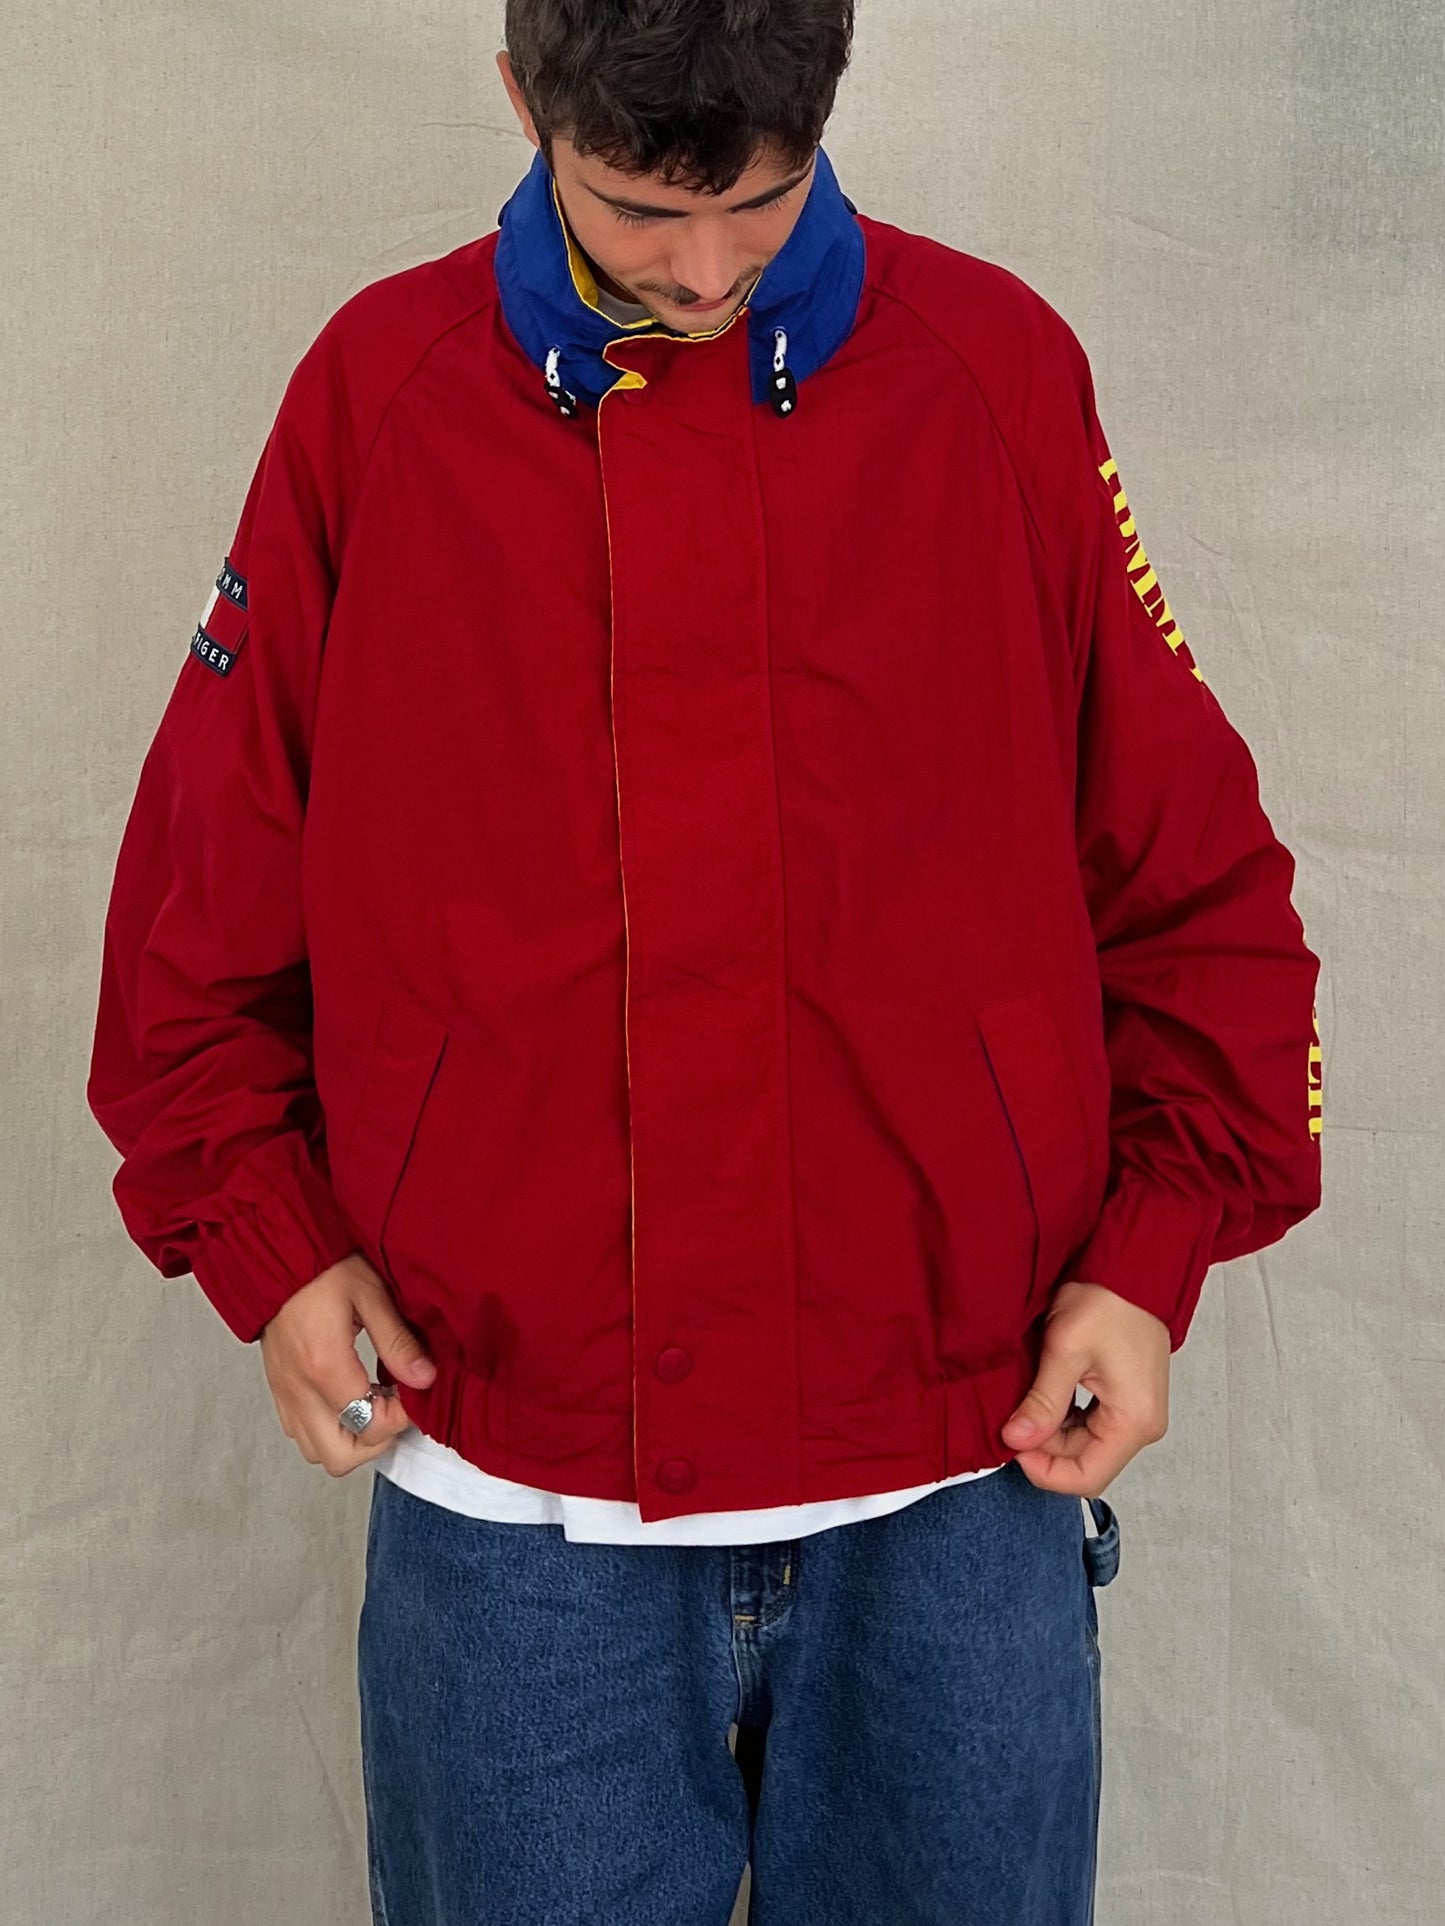 90's Tommy Hilfiger Embroidered Vintage Jacket with Hood Size L